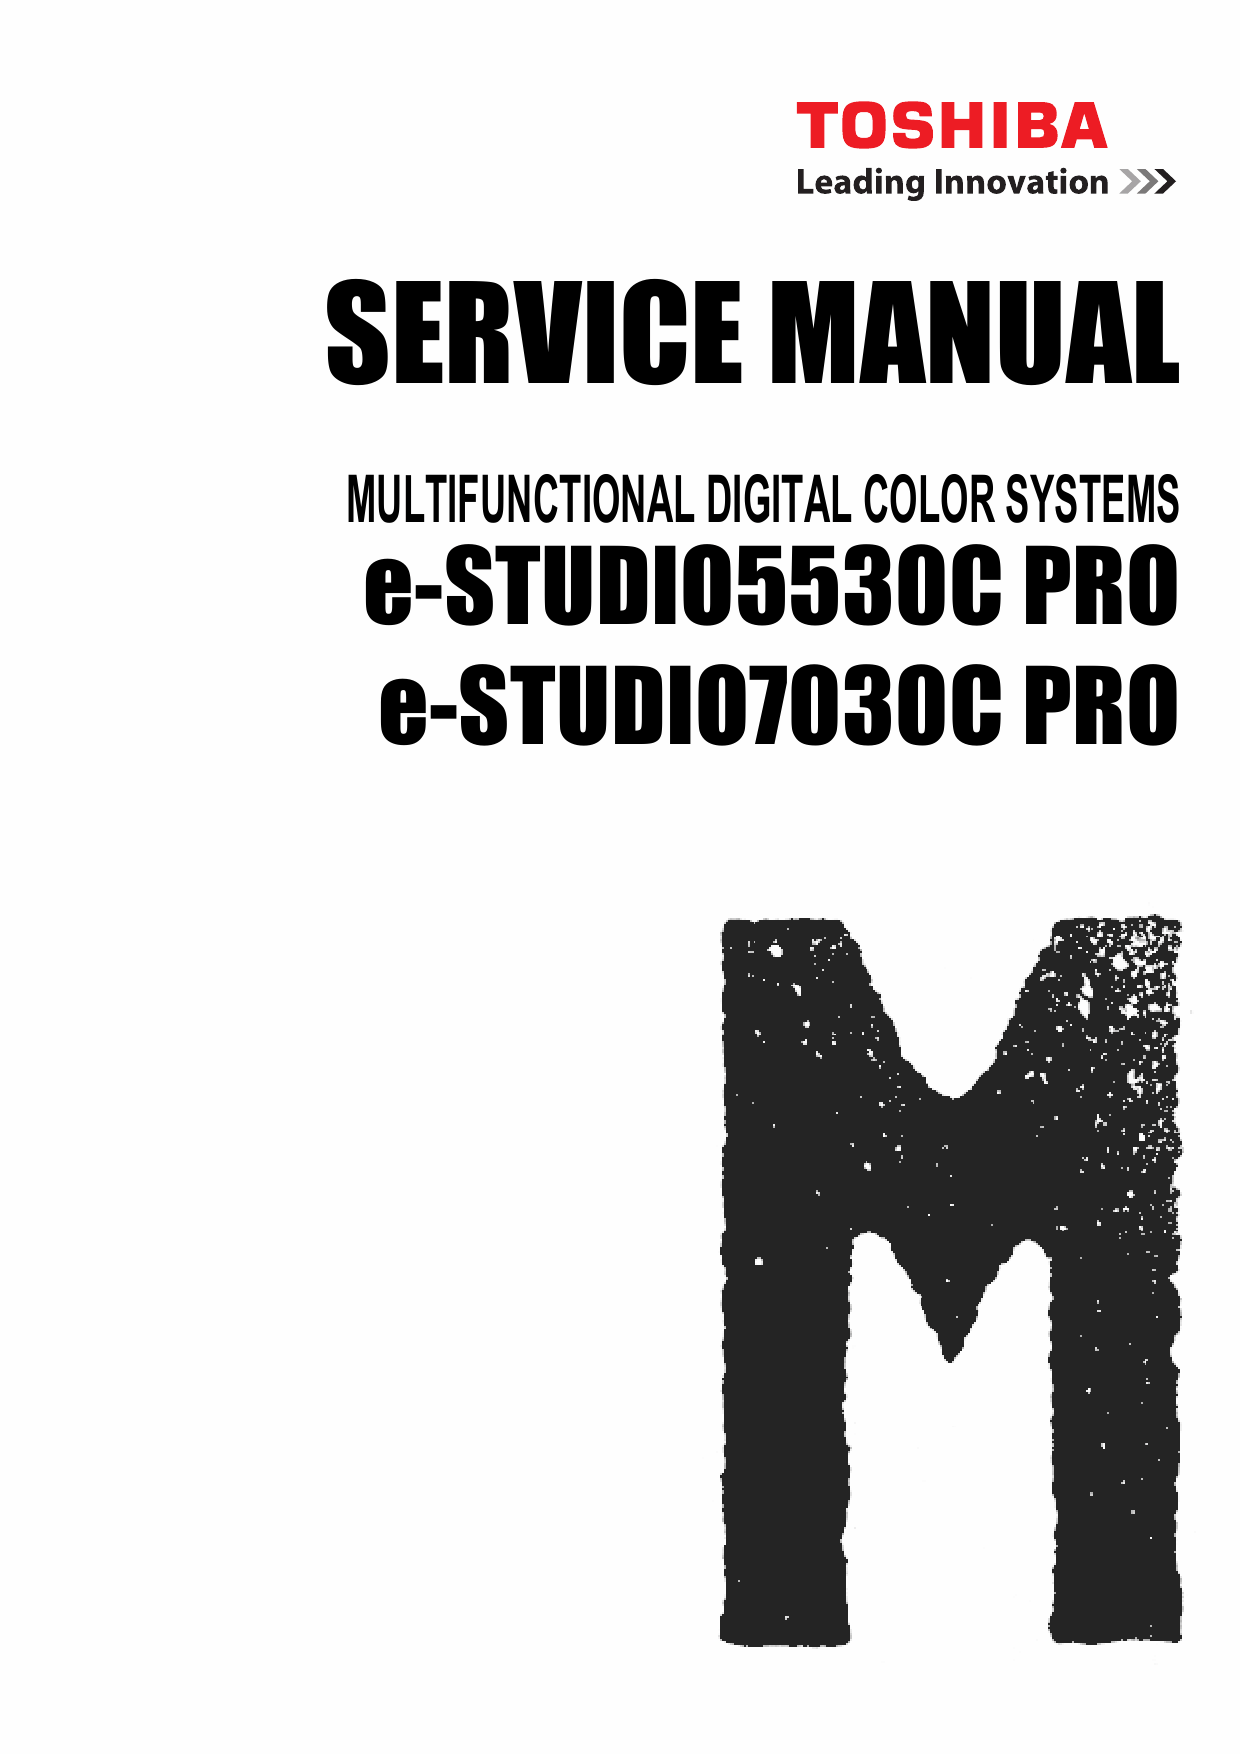 TOSHIBA e-STUDIO 5530cPro 7030cPro Service Manual and Parts-1